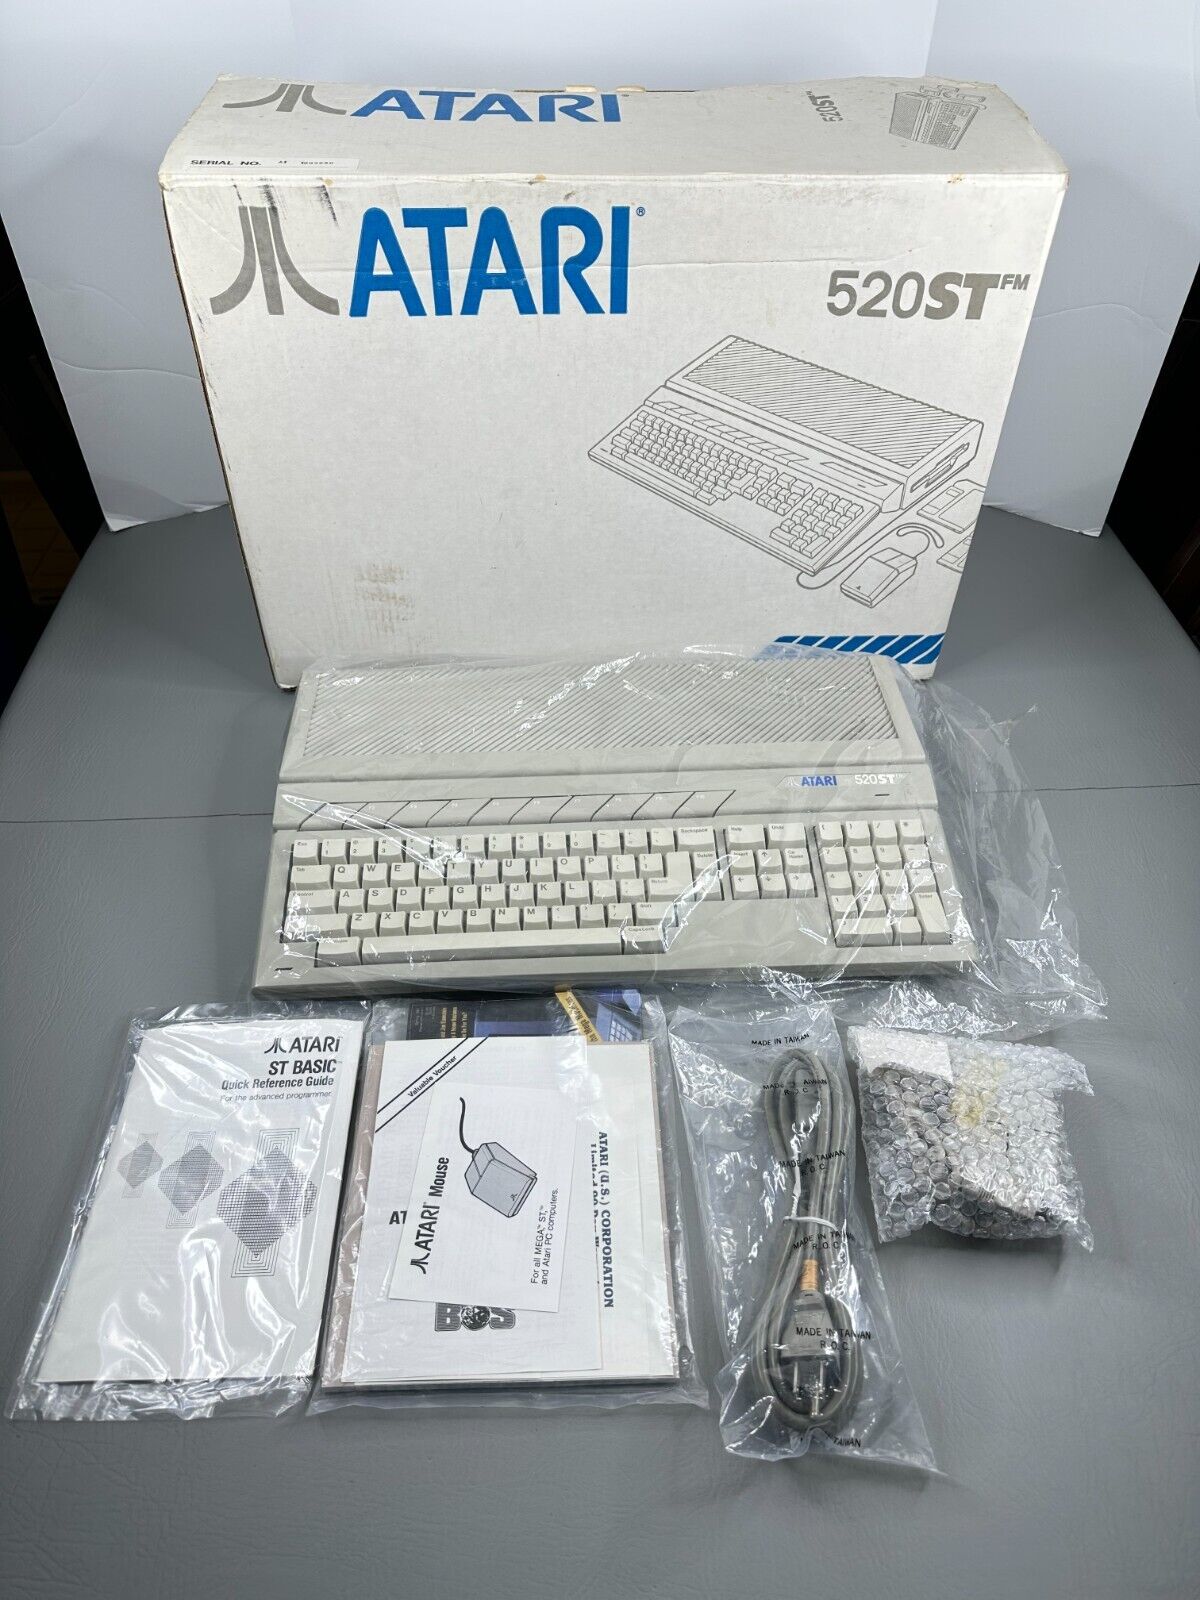 Atari 520ST Keyboard Computer Complete In Original Box 1986